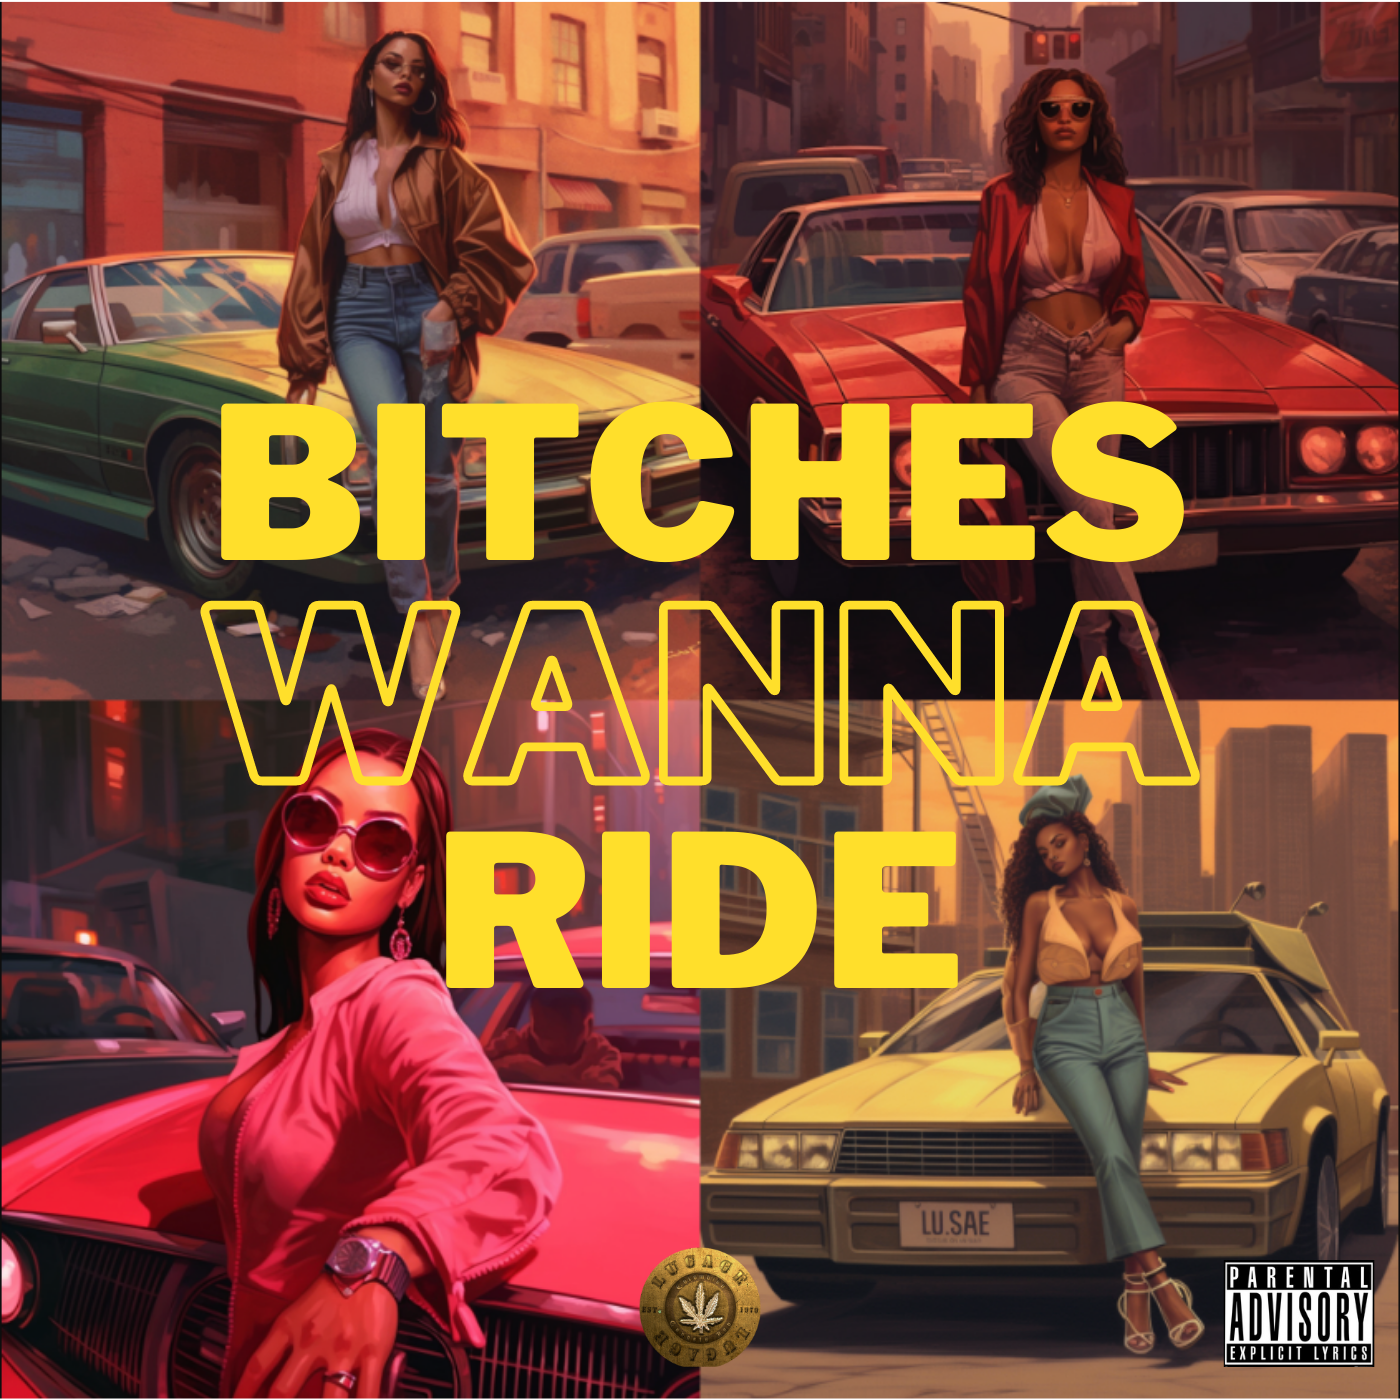 Load video: Artist: LUGAGE Rap Song: Bitches Wanna Ride Lyric video